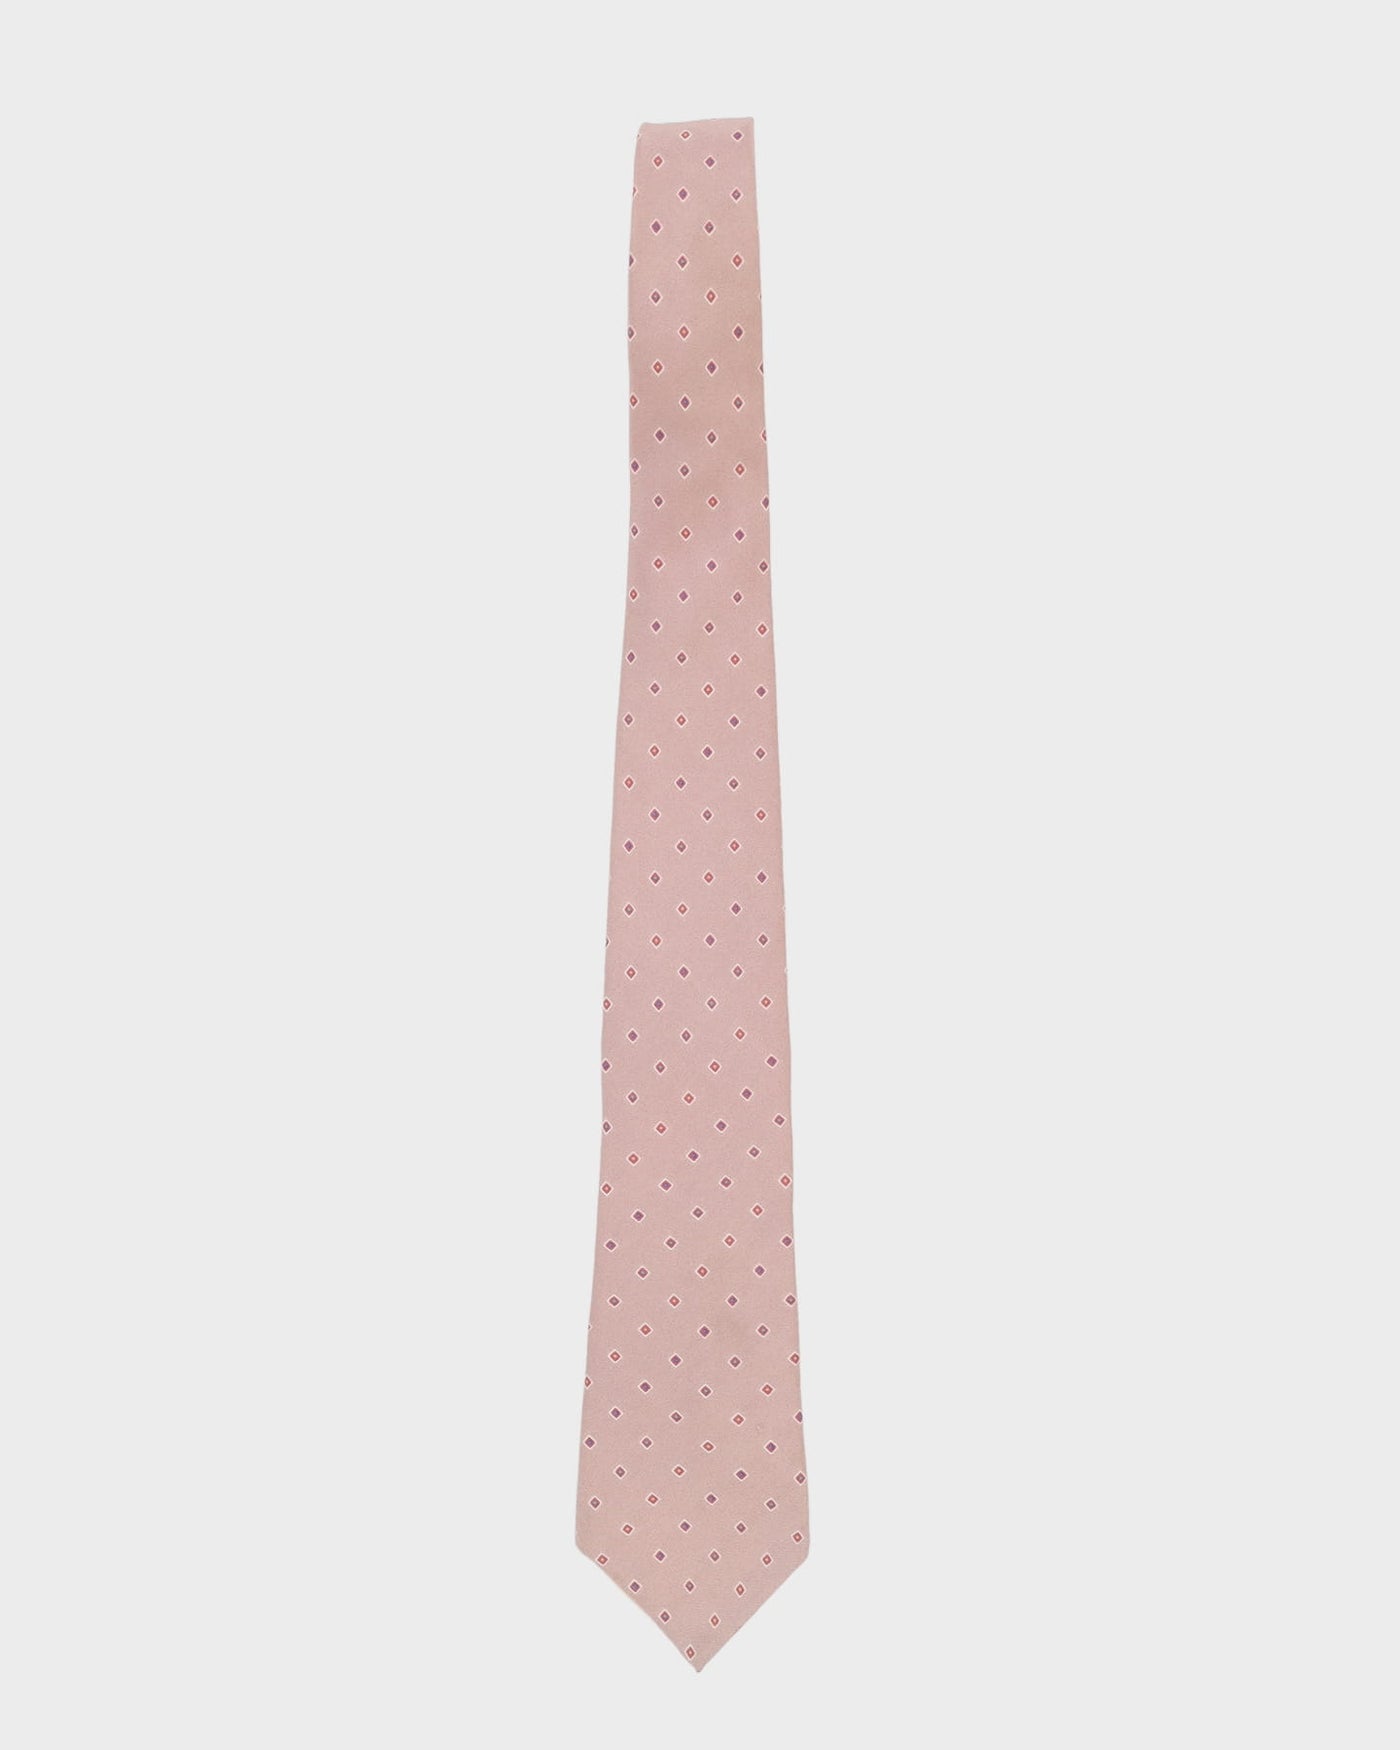 Vintage Lanvin Pink Patterned Silk Tie